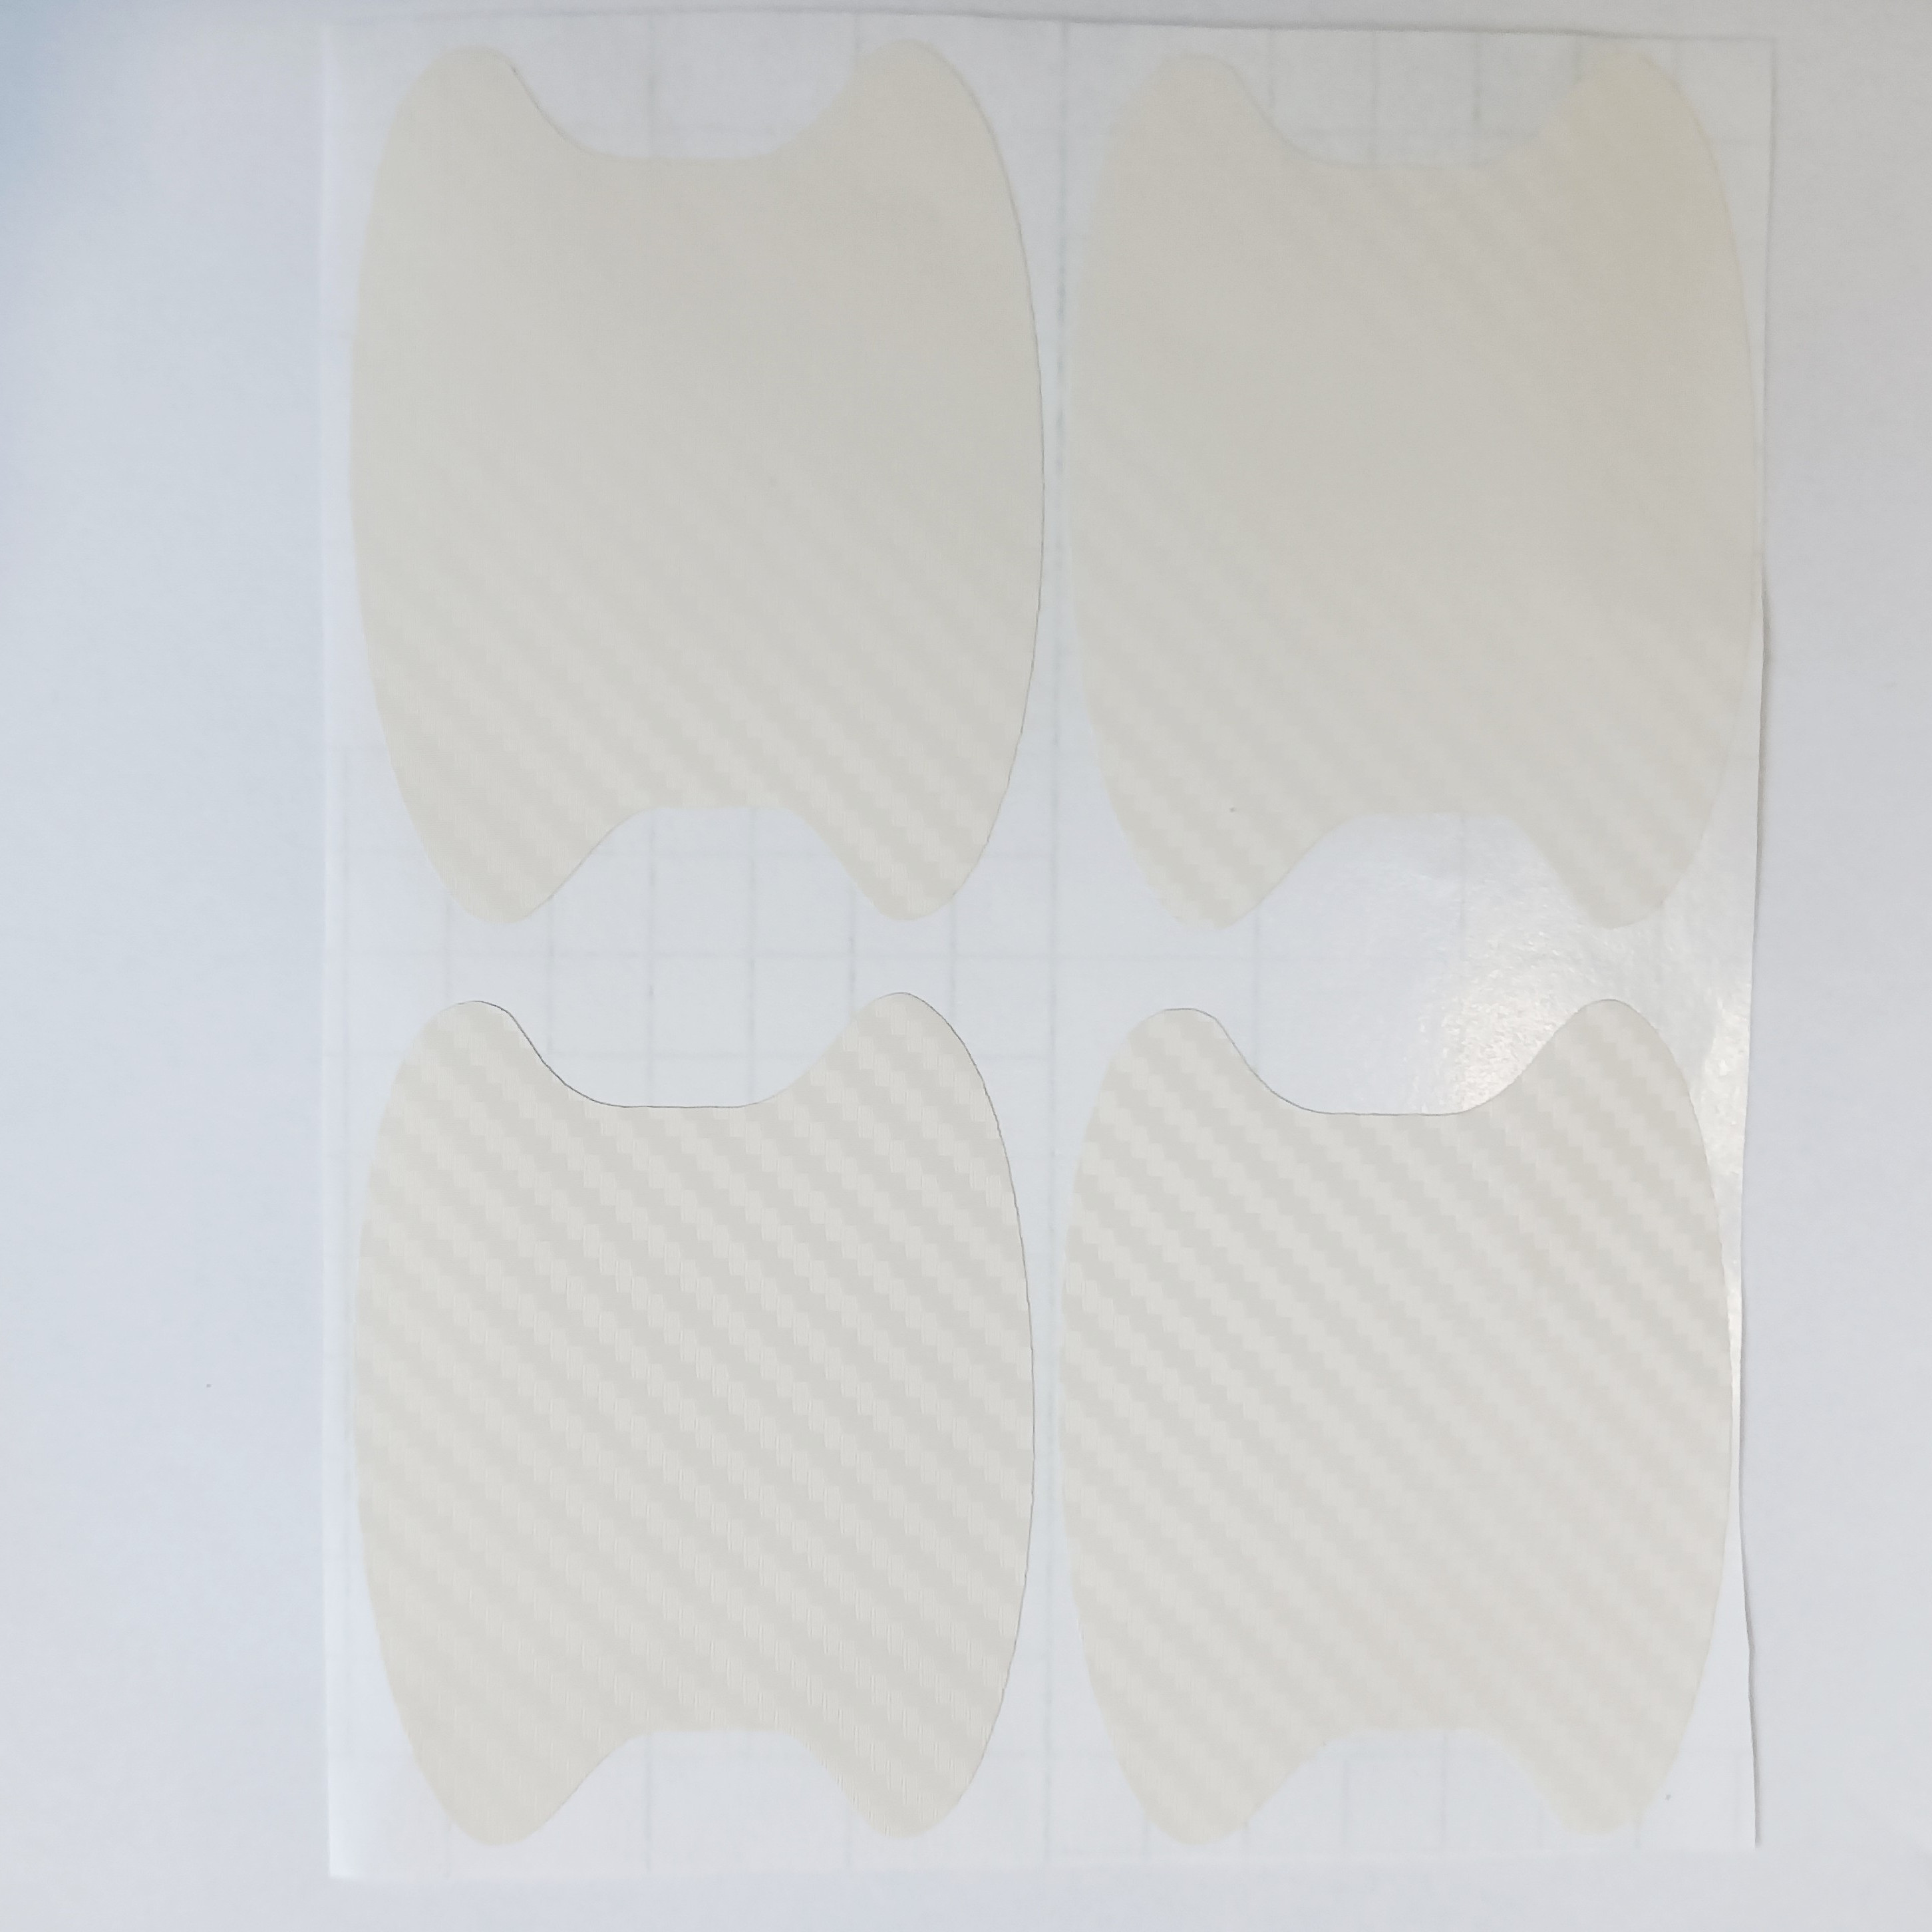 40pcs Car Door Sticker Scratches Resistant Cover Auto Handle